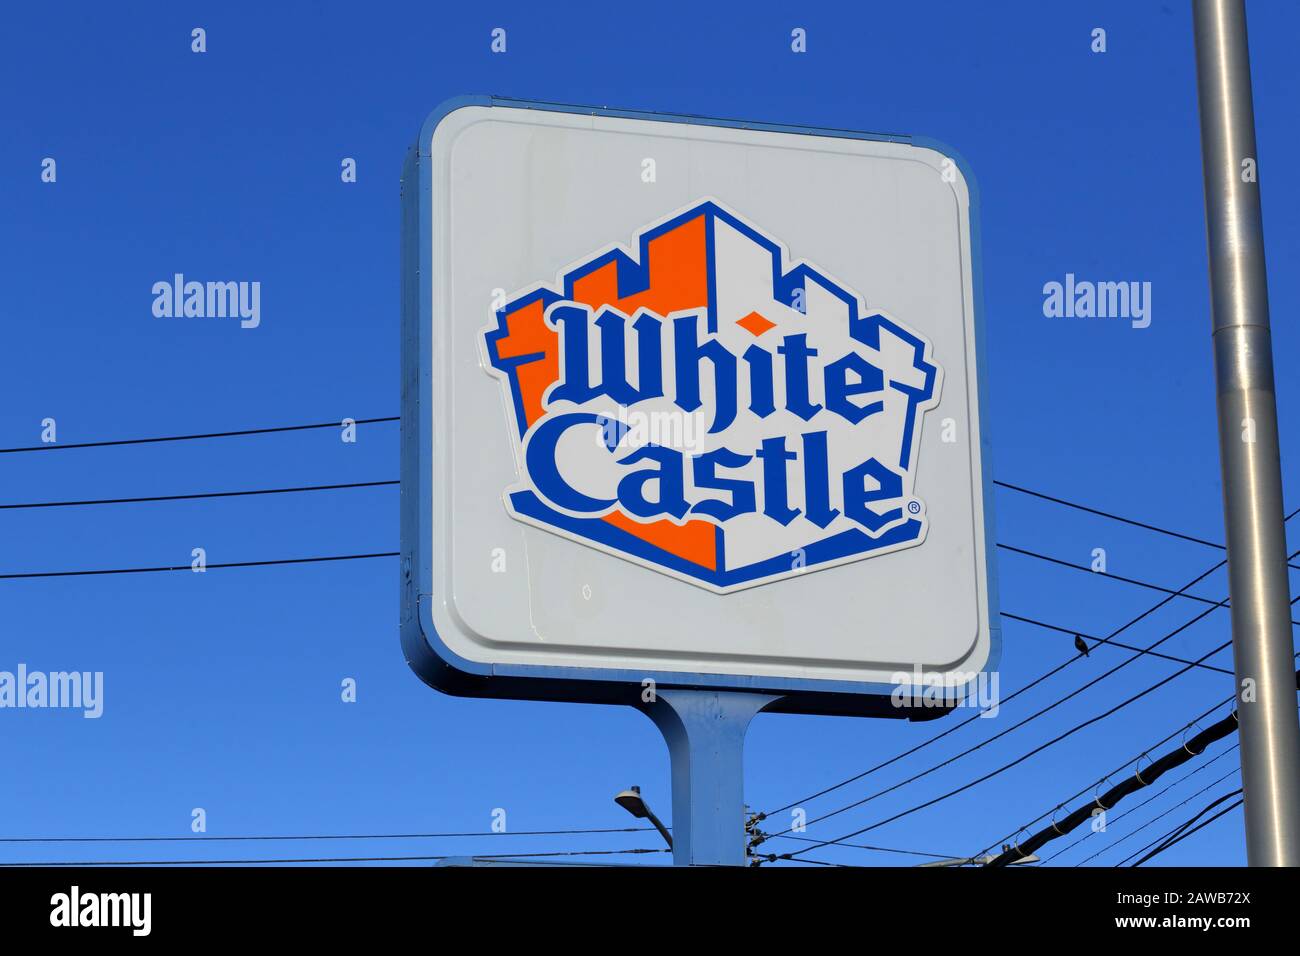 A White Castle sign on a pole against a sunny, blue sky Stock Photo